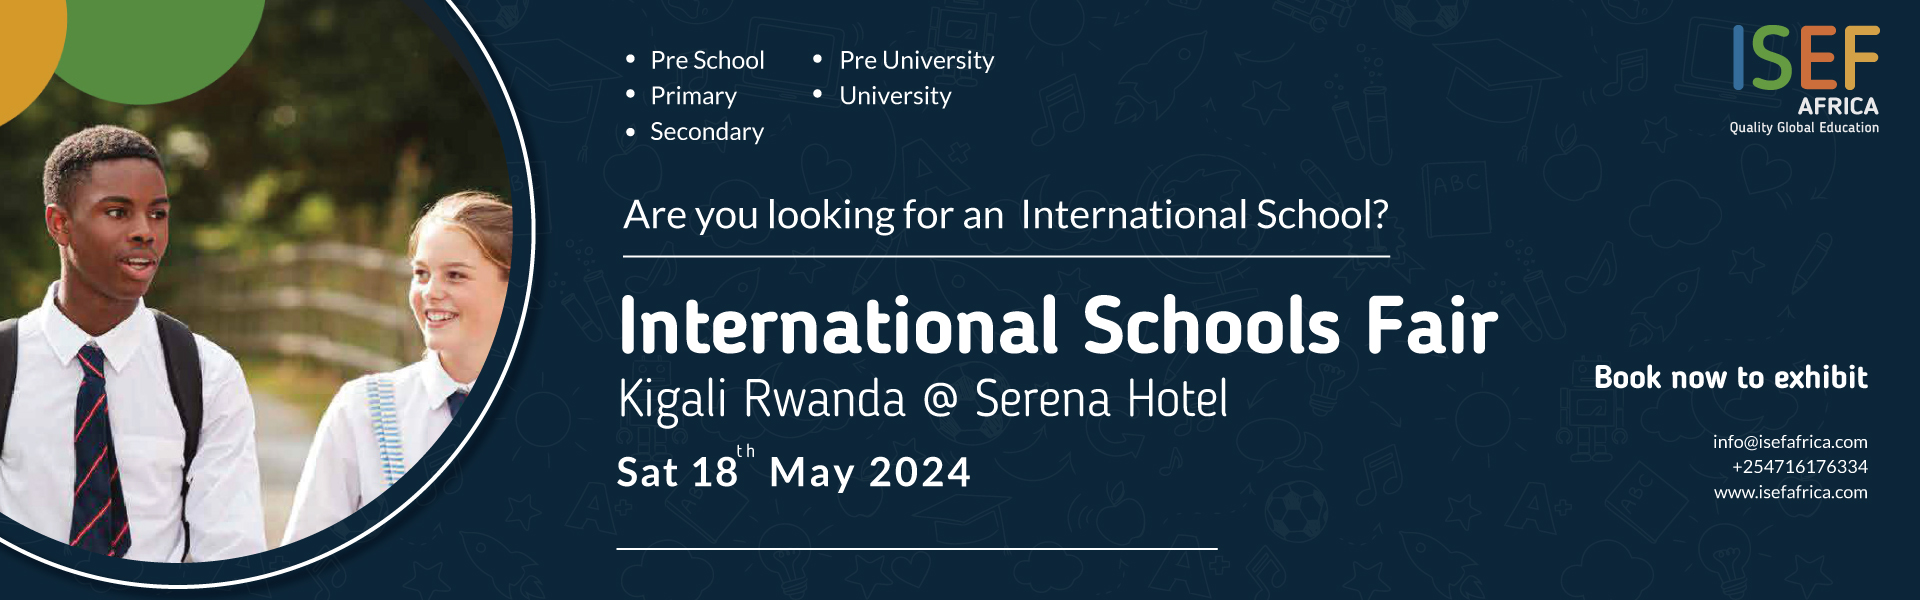 12TH INTERNATIONAL SCHOOLS EDUCATION FAIR,KIGALI - RWANDA 